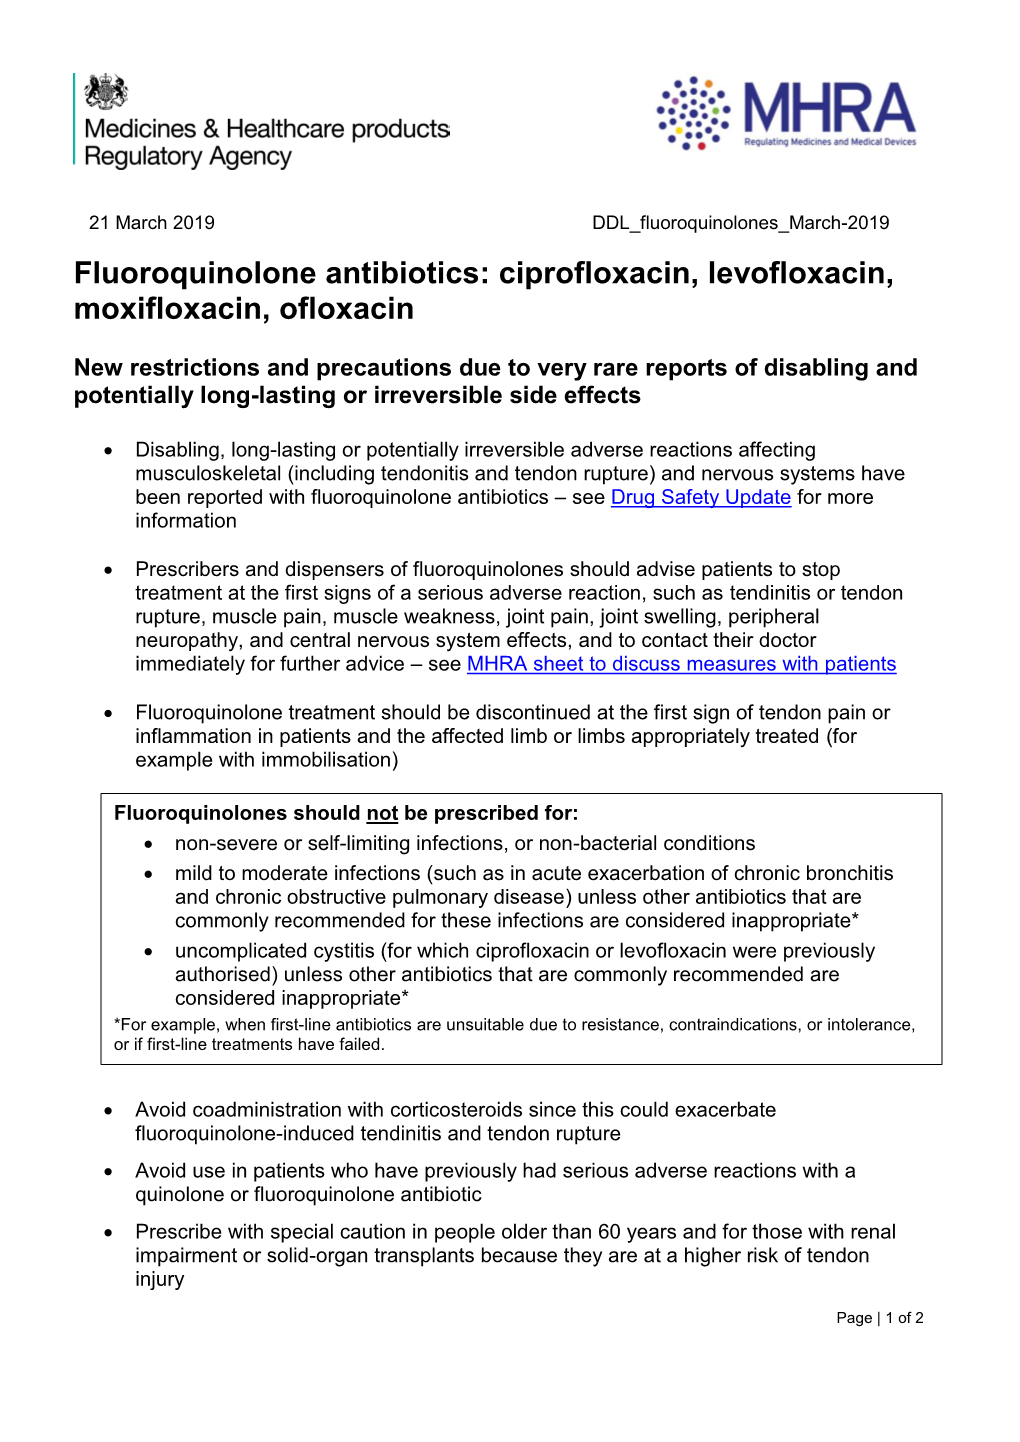 Fluoroquinolone Antibiotics: Ciprofloxacin, Levofloxacin, Moxifloxacin, Ofloxacin